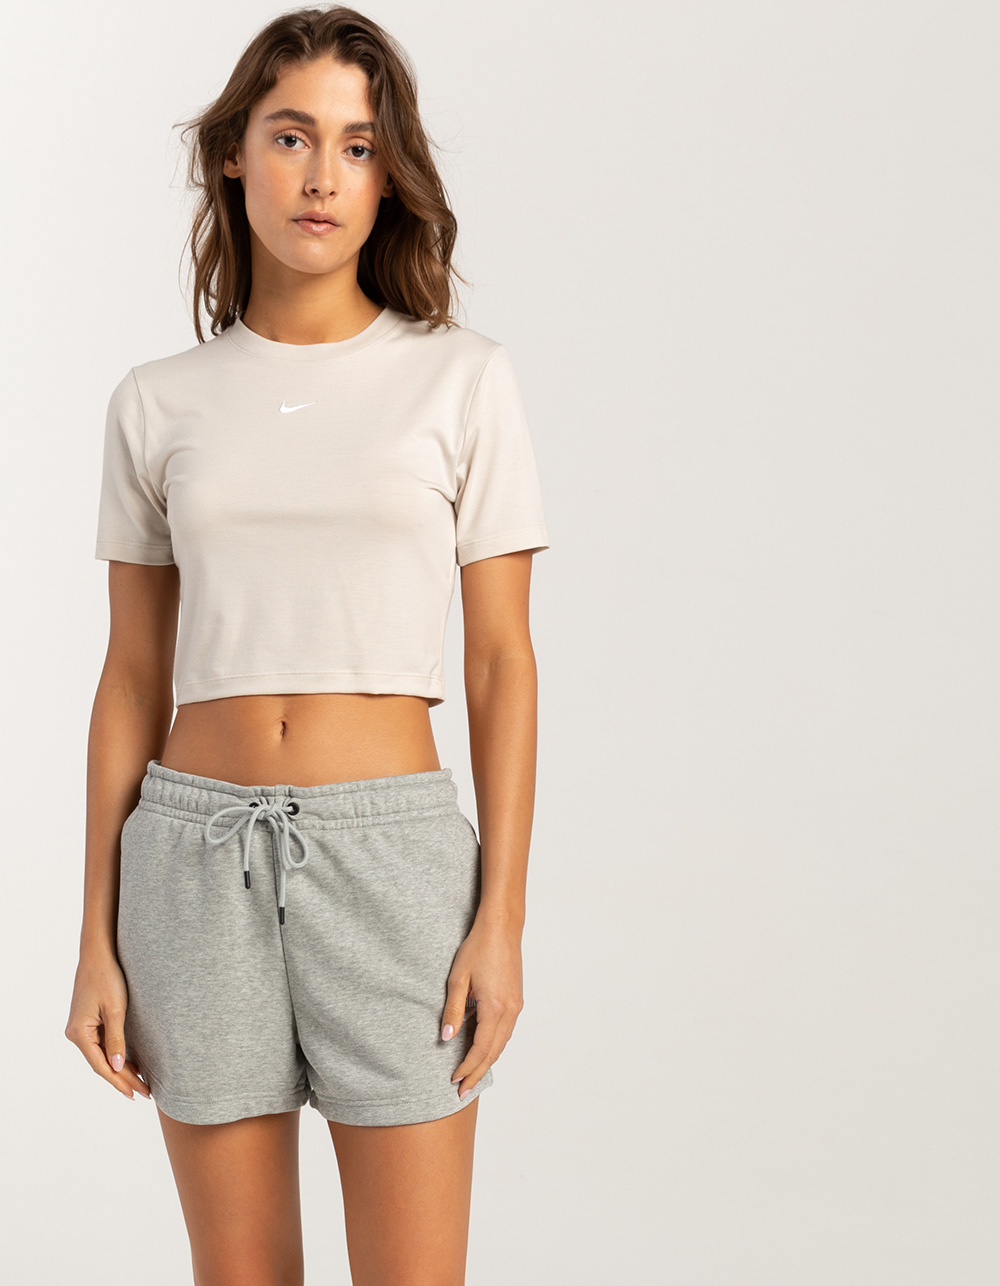 Tilly Grey Crop Top and Leggings Activewear Set - ShopperBoard